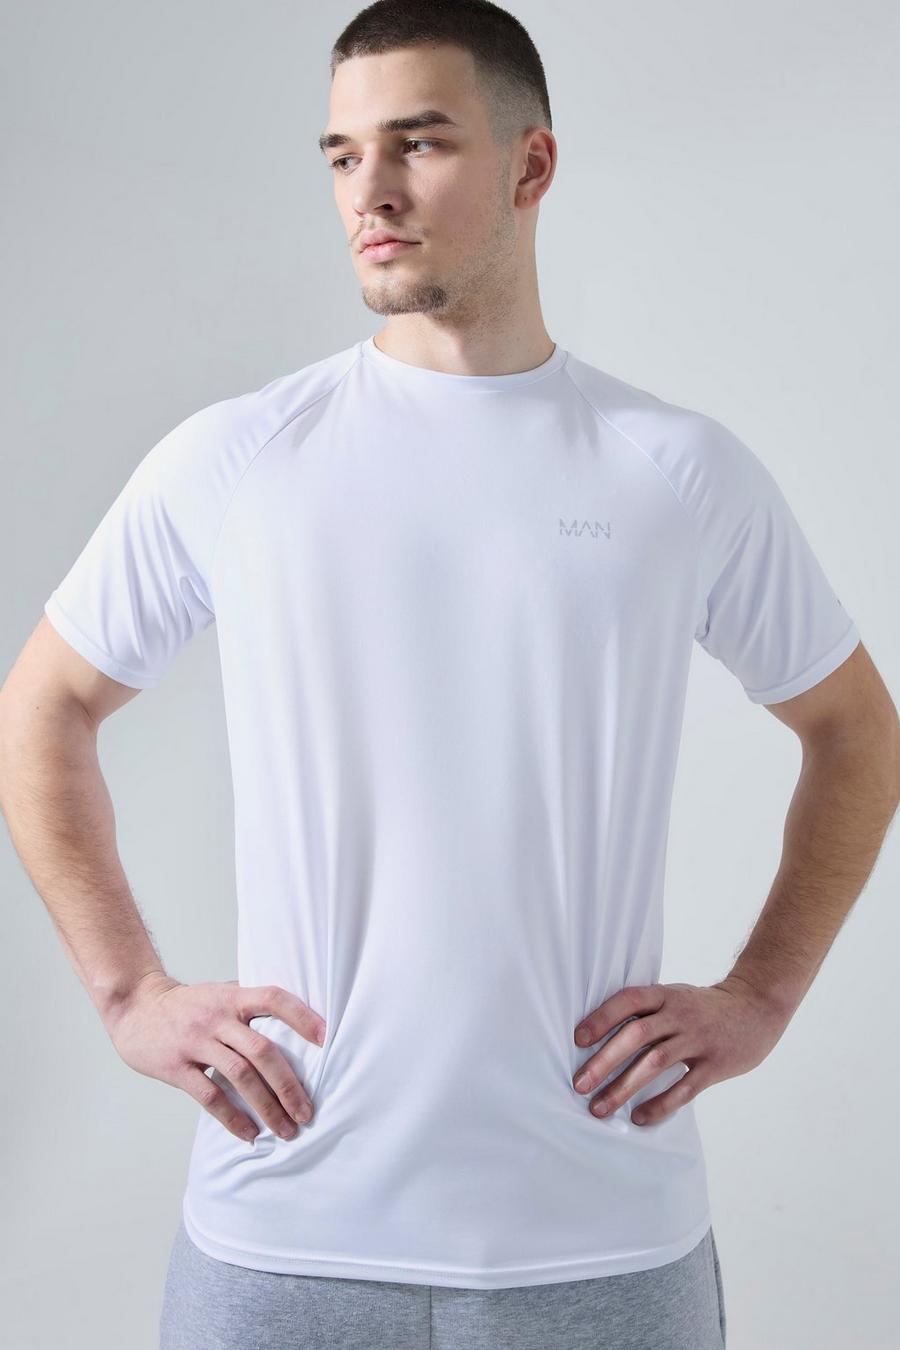 Tall Man Active Gym Raglan T-Shirt, White